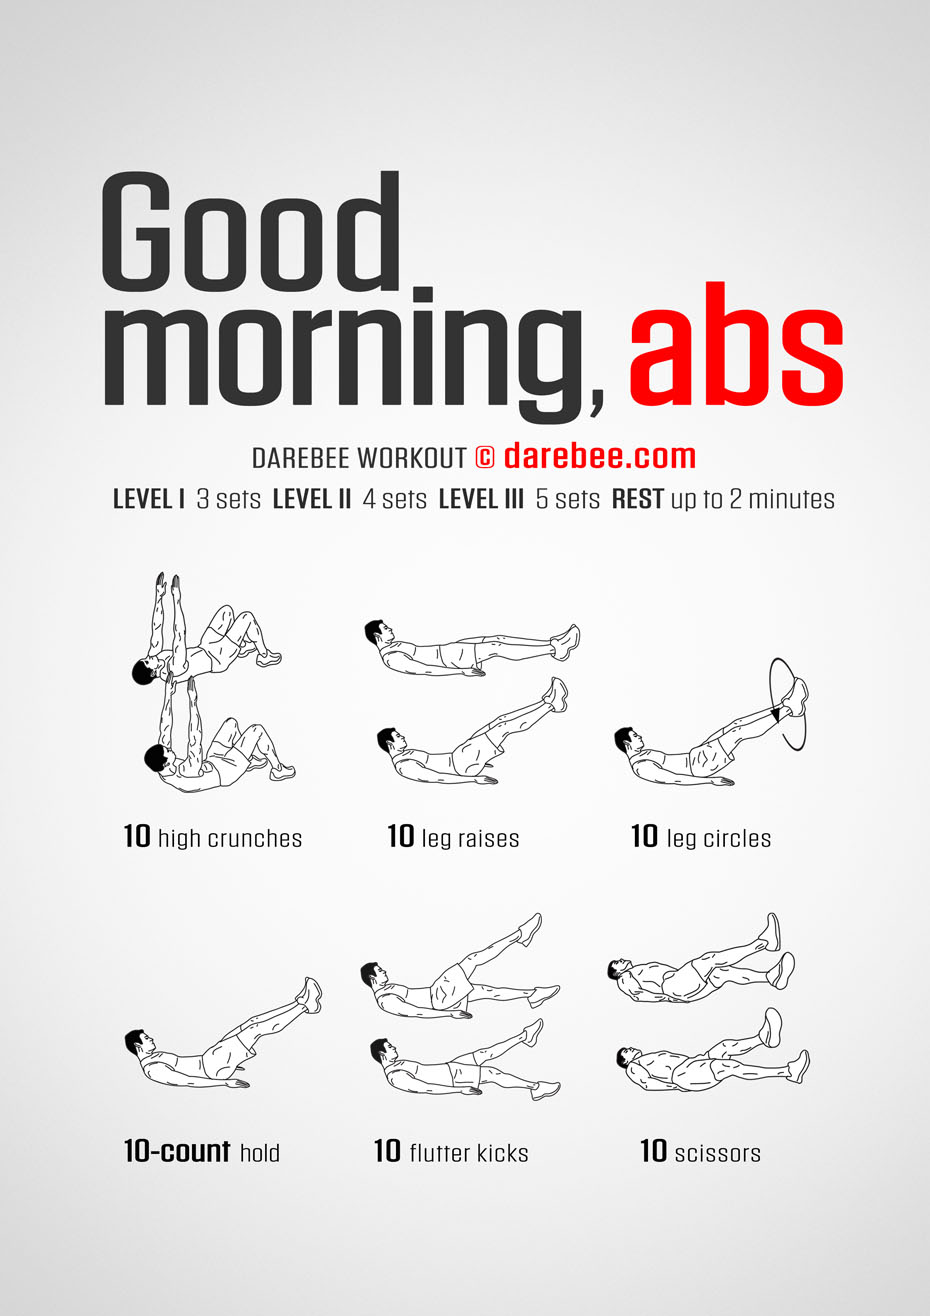 morning gym workout routine